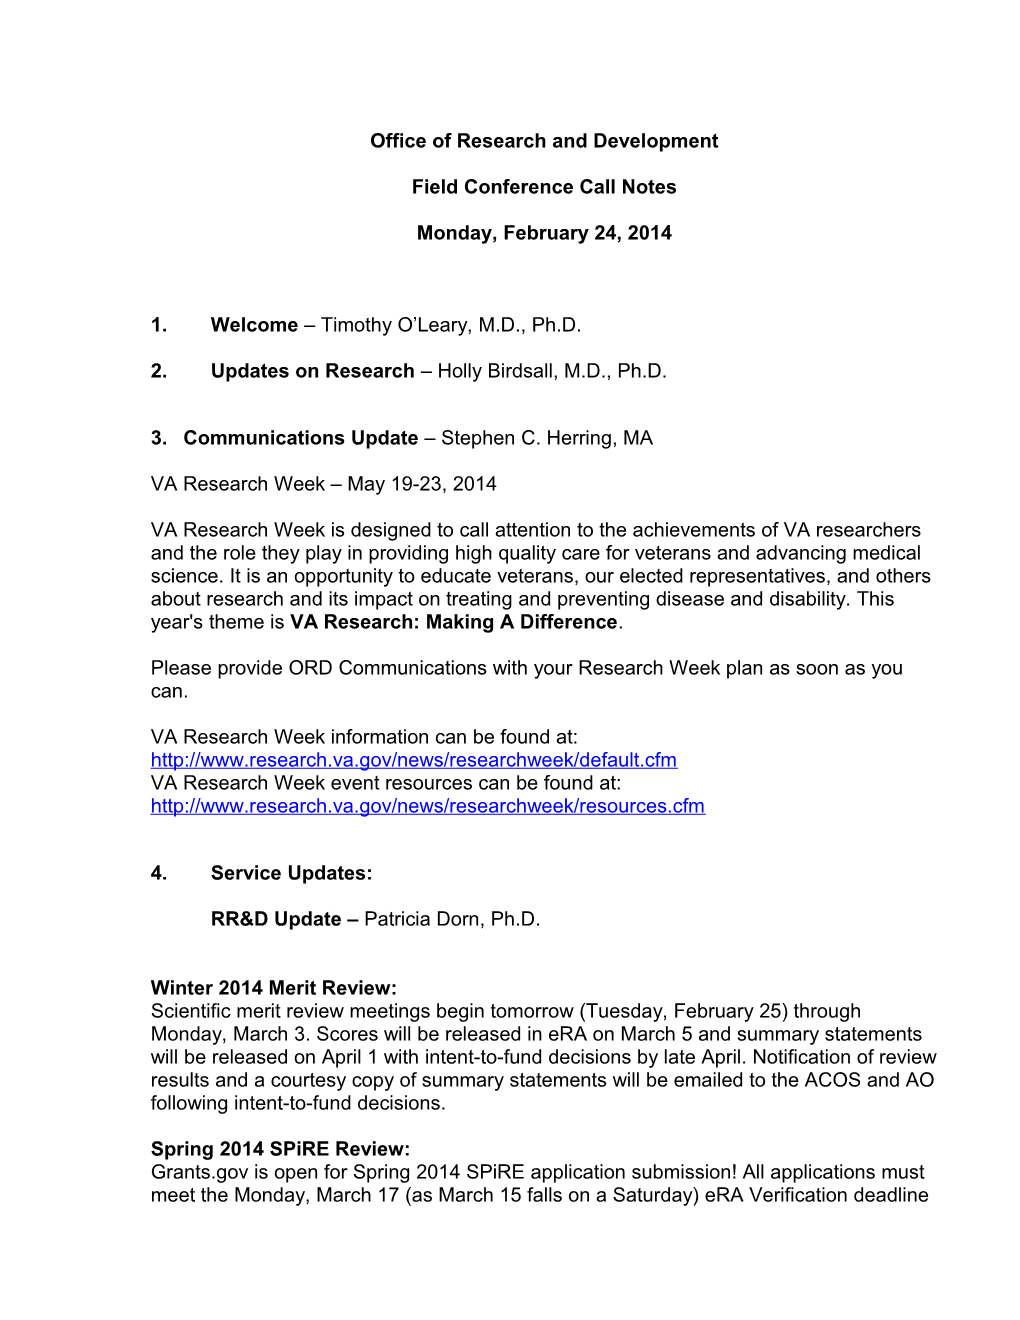 VA ORD Conference Call Notes, Feb. 24, 2014